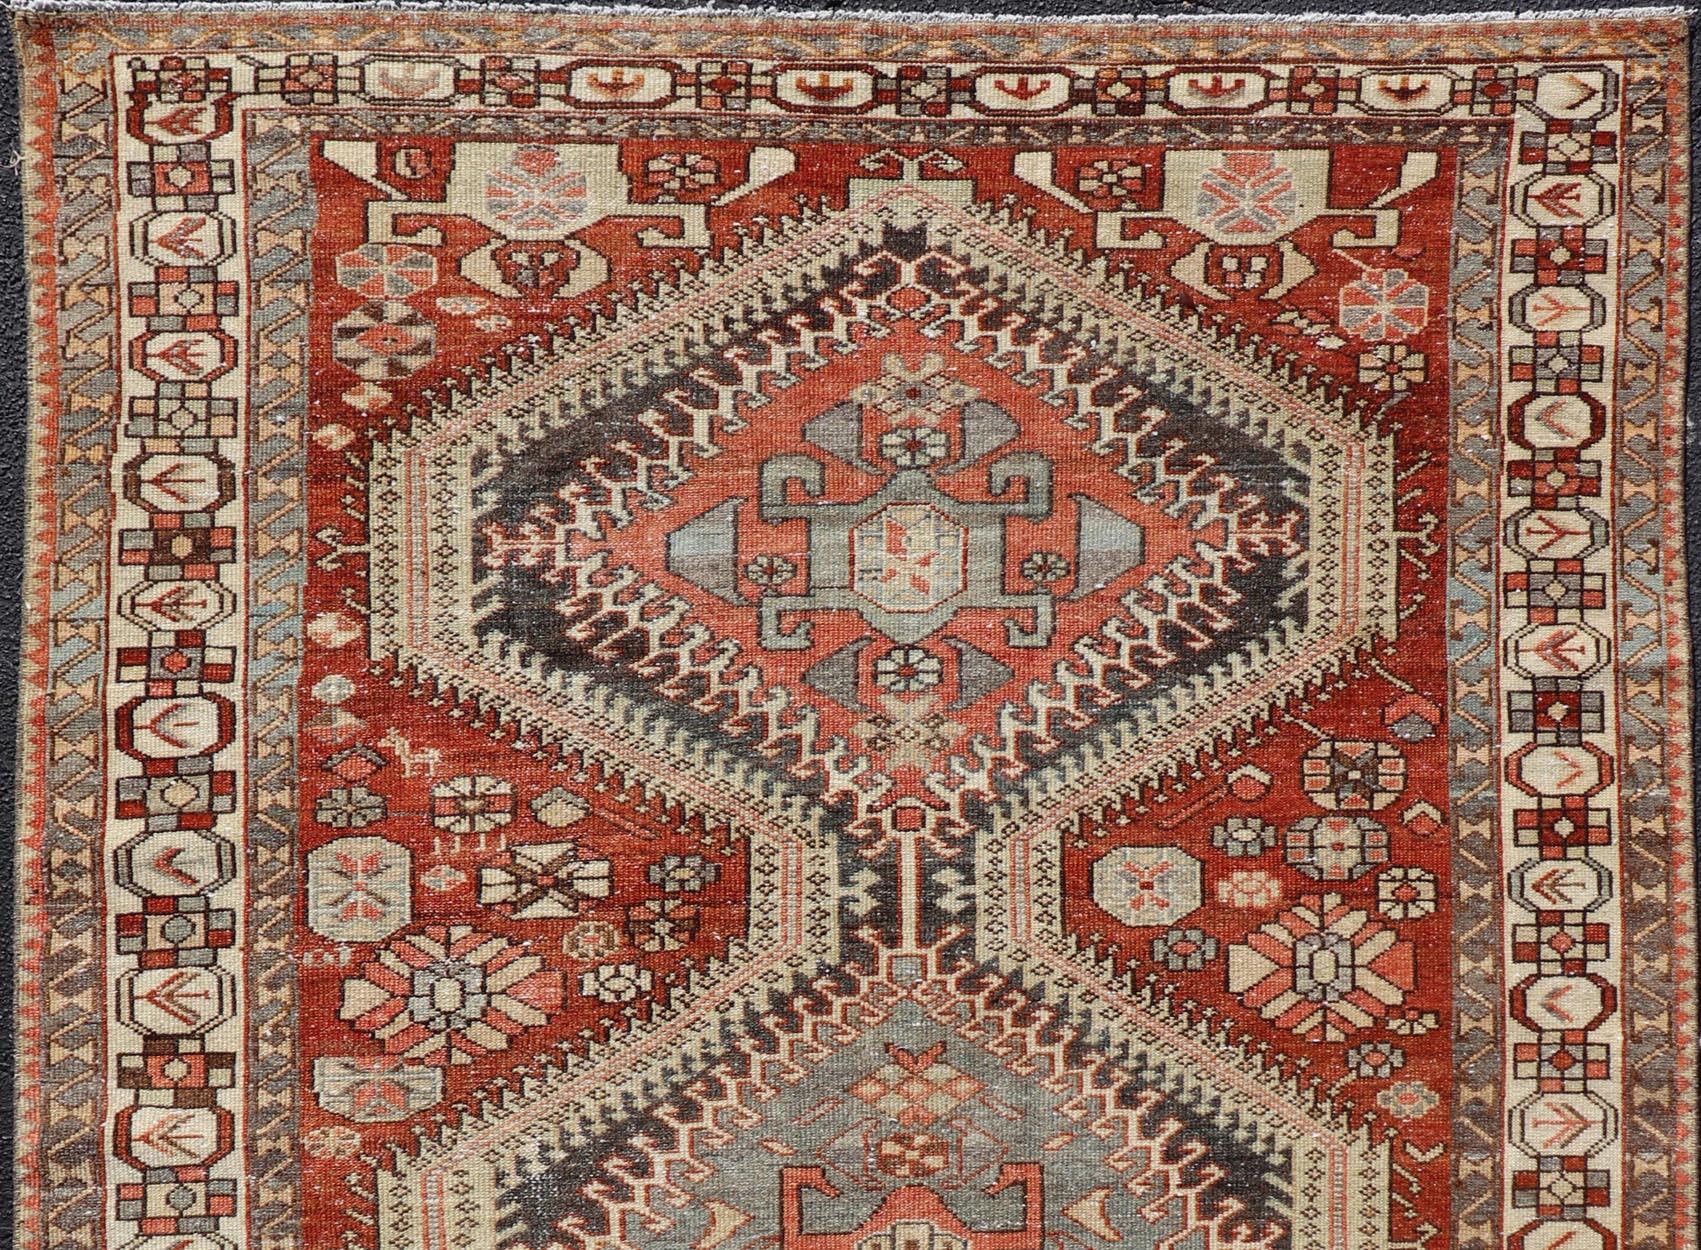 Antique Tribal Bakhtiari Rug, Keivan Woven Arts / rug EMB-9620-P13523, country of origin / type: Persian / Bakhtiari, circa Early-20th Century.

Measures: 5'2 x 8'3.